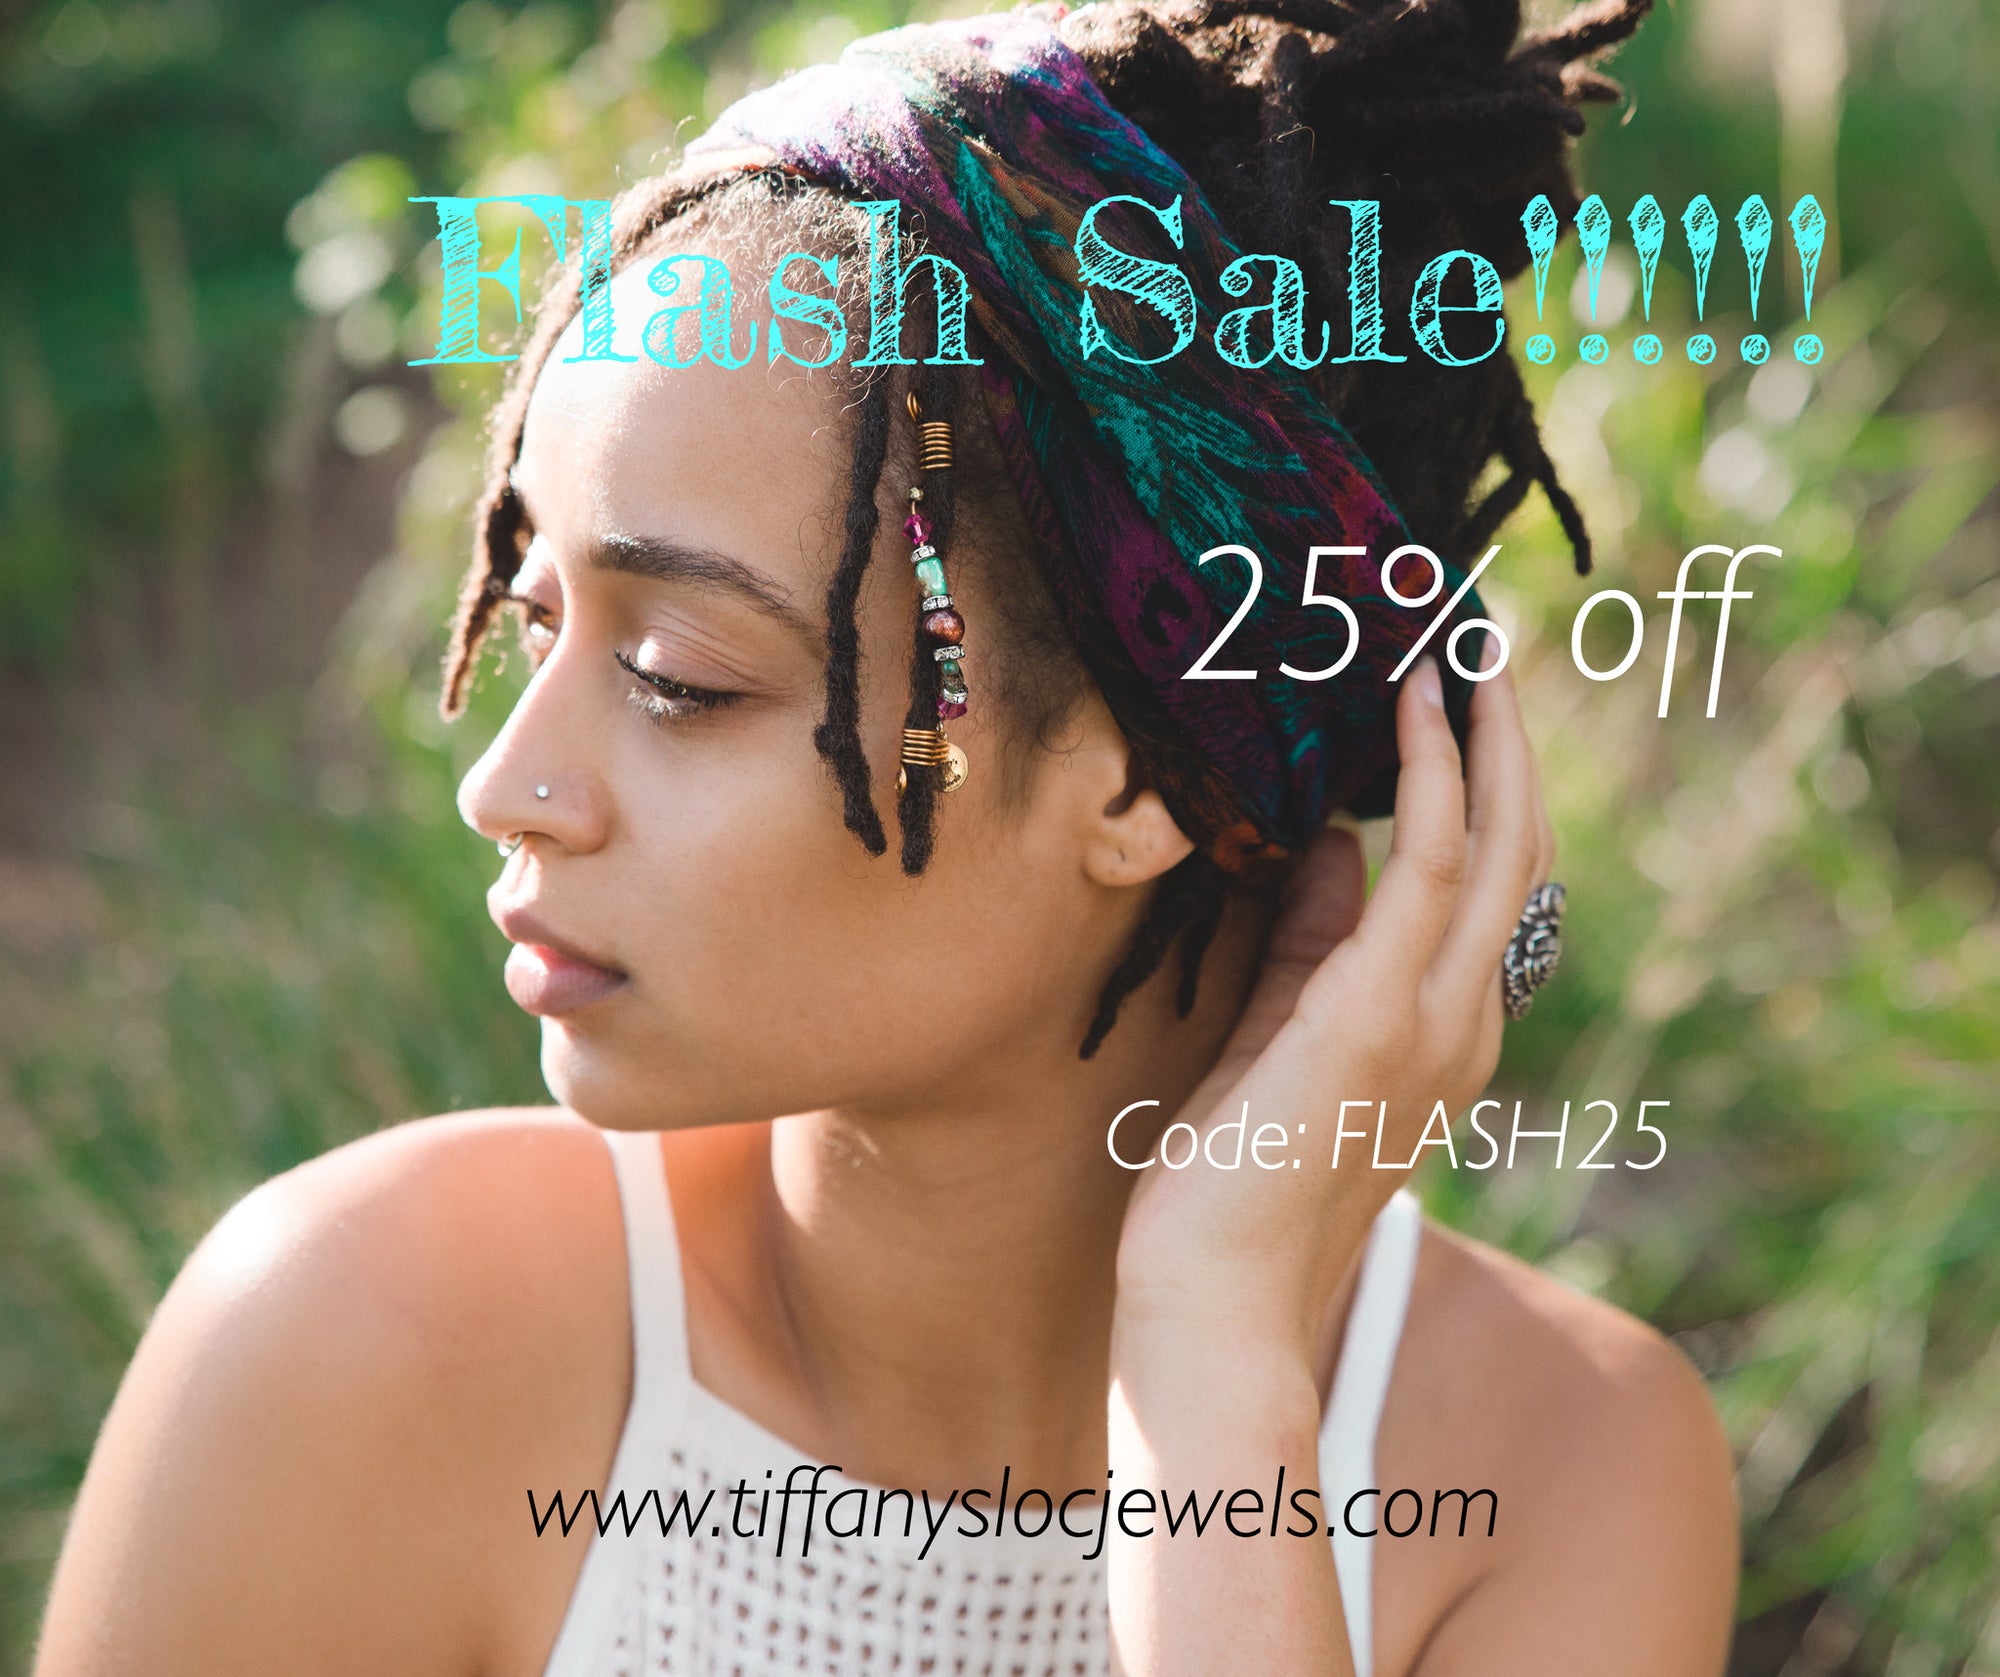 Flash Sale! 25% off